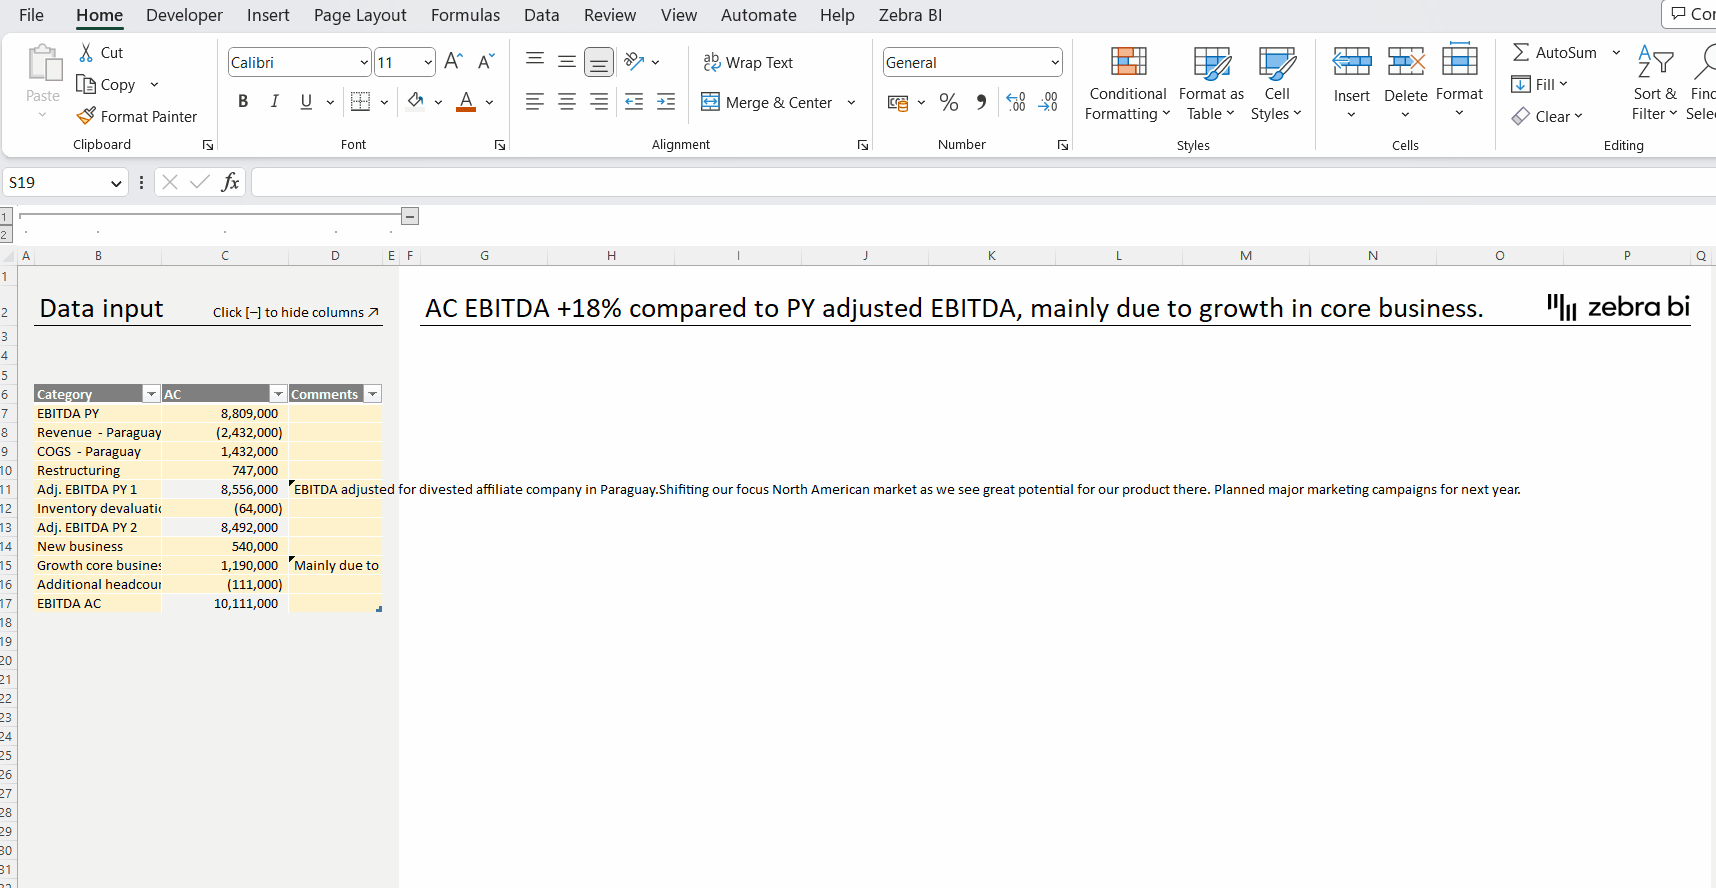 Adjusted financial statements, adjusted EBITDA - how to show adjustments using Zebra BI for Office